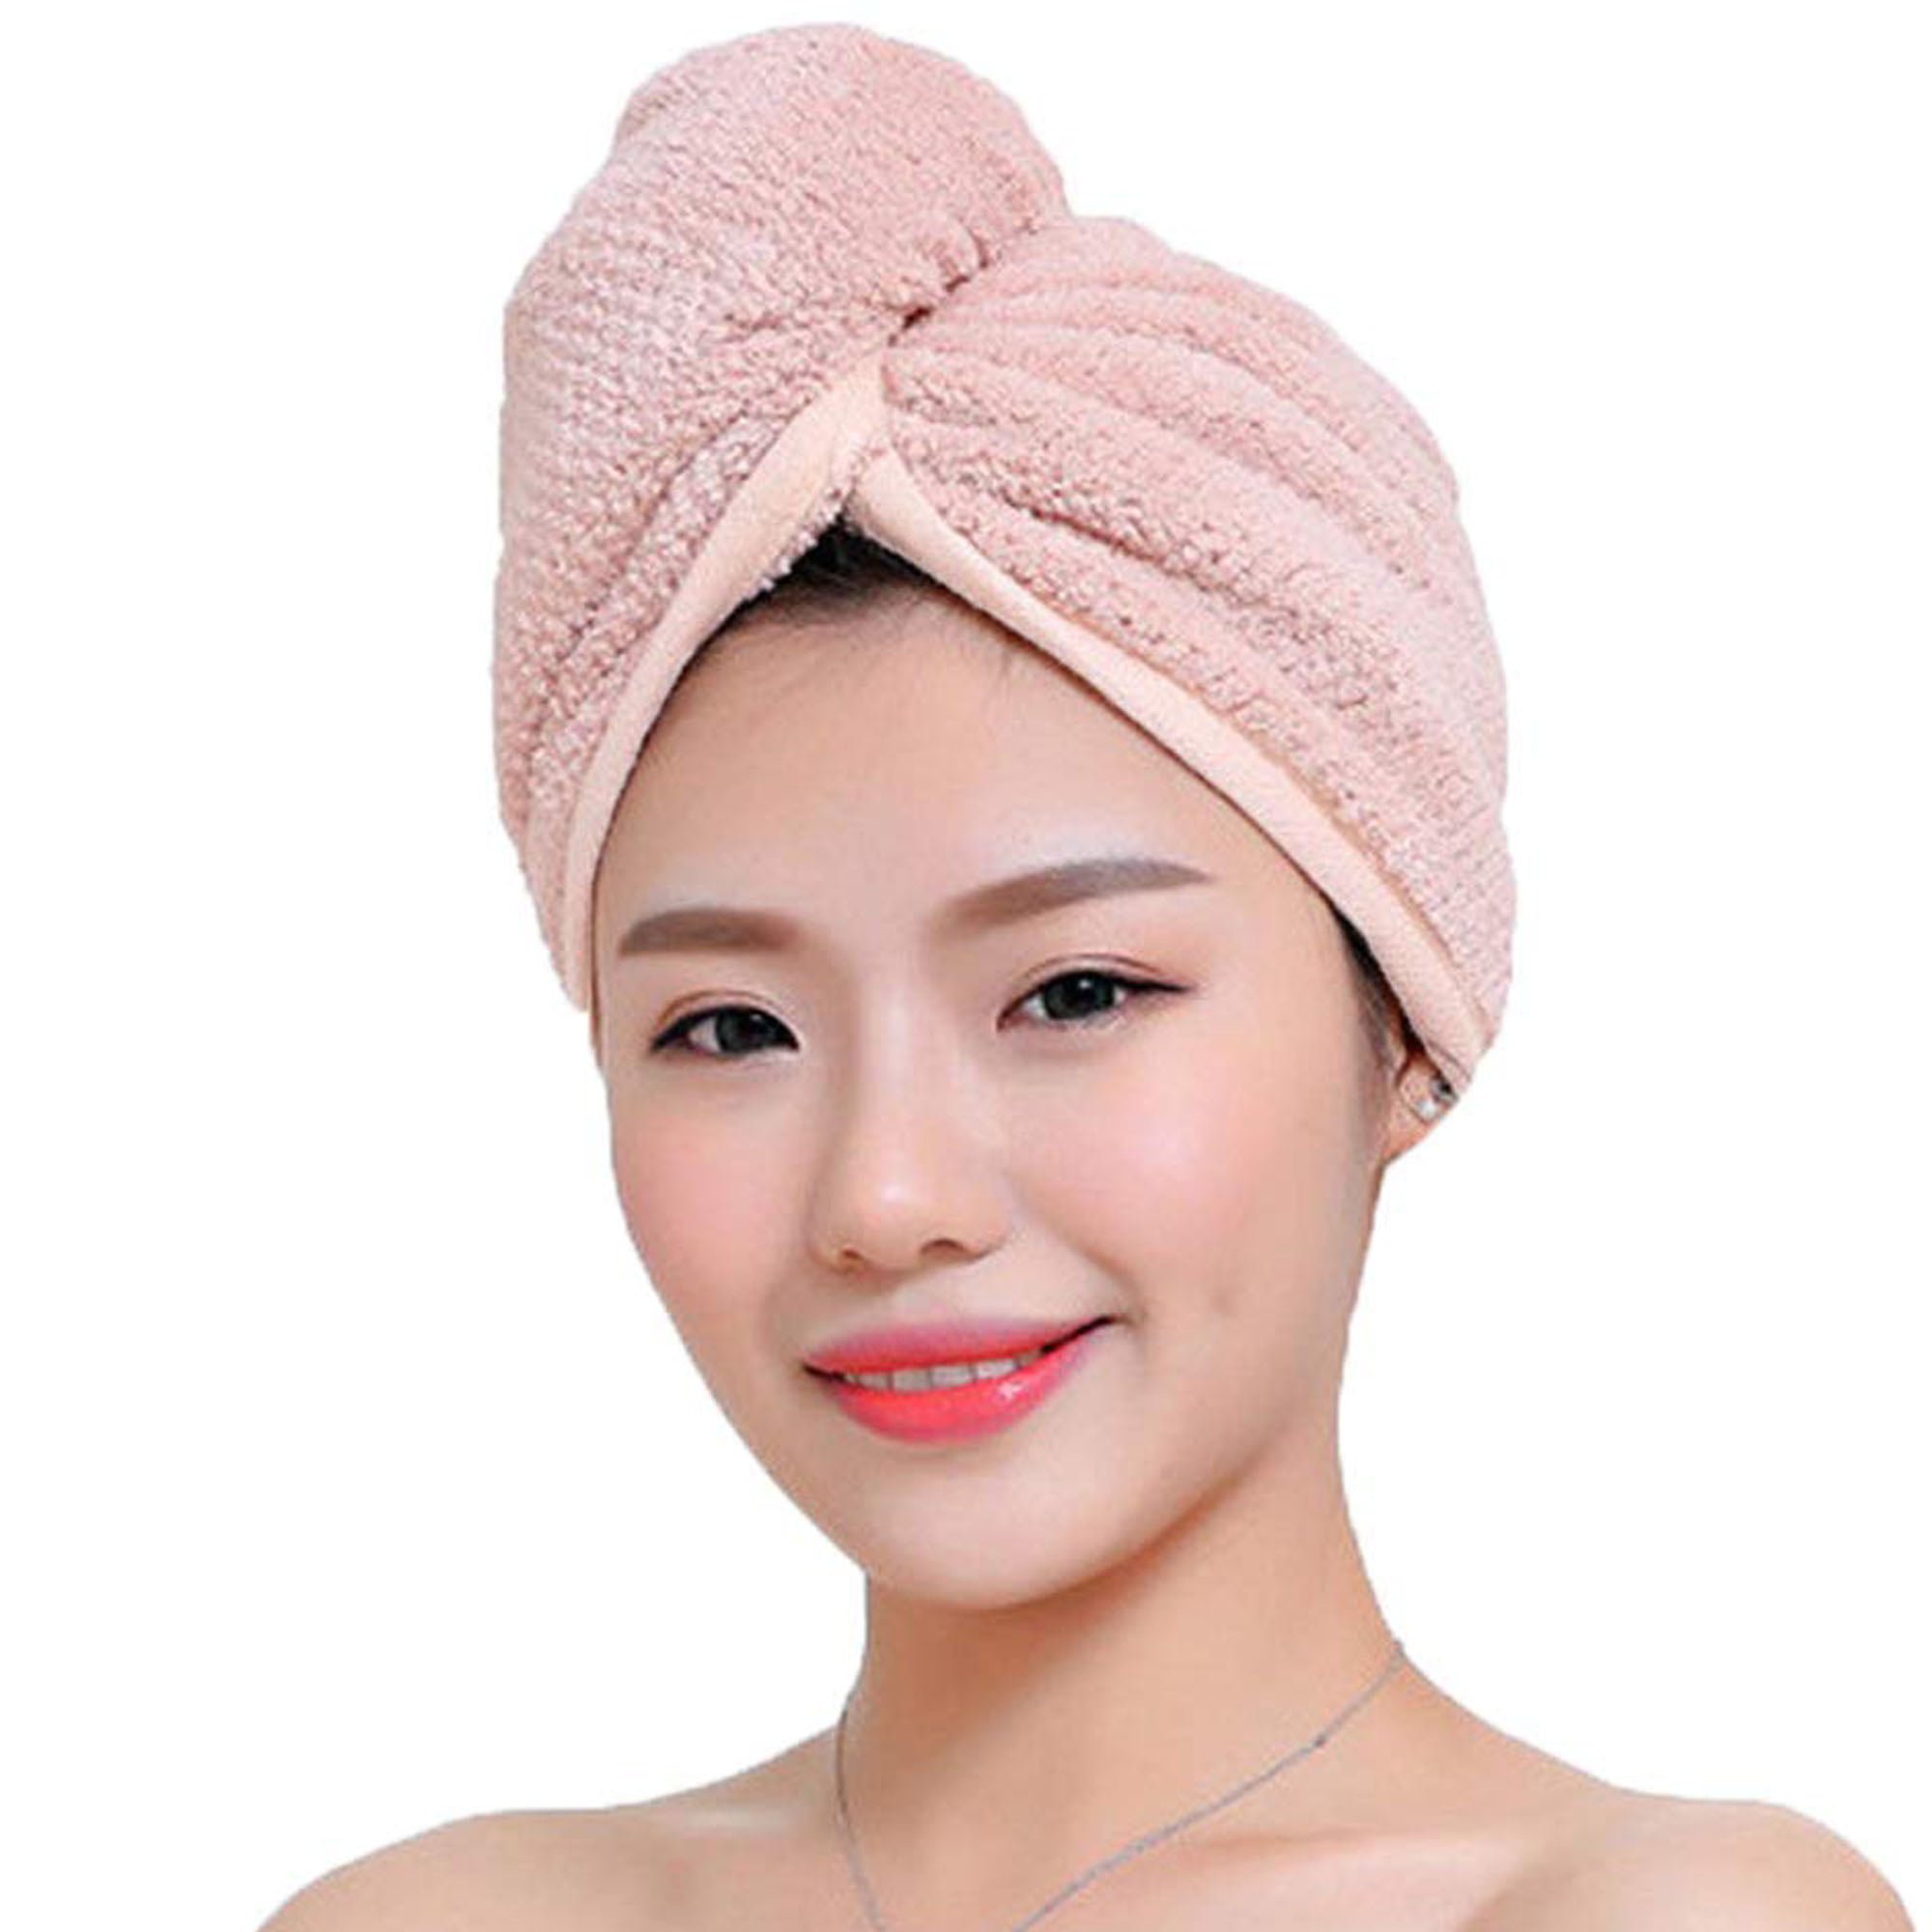 Microfiber Hair Wrap Towel Drying Bath Spa Head Cap Turban Wrap Dry Shower HOT 